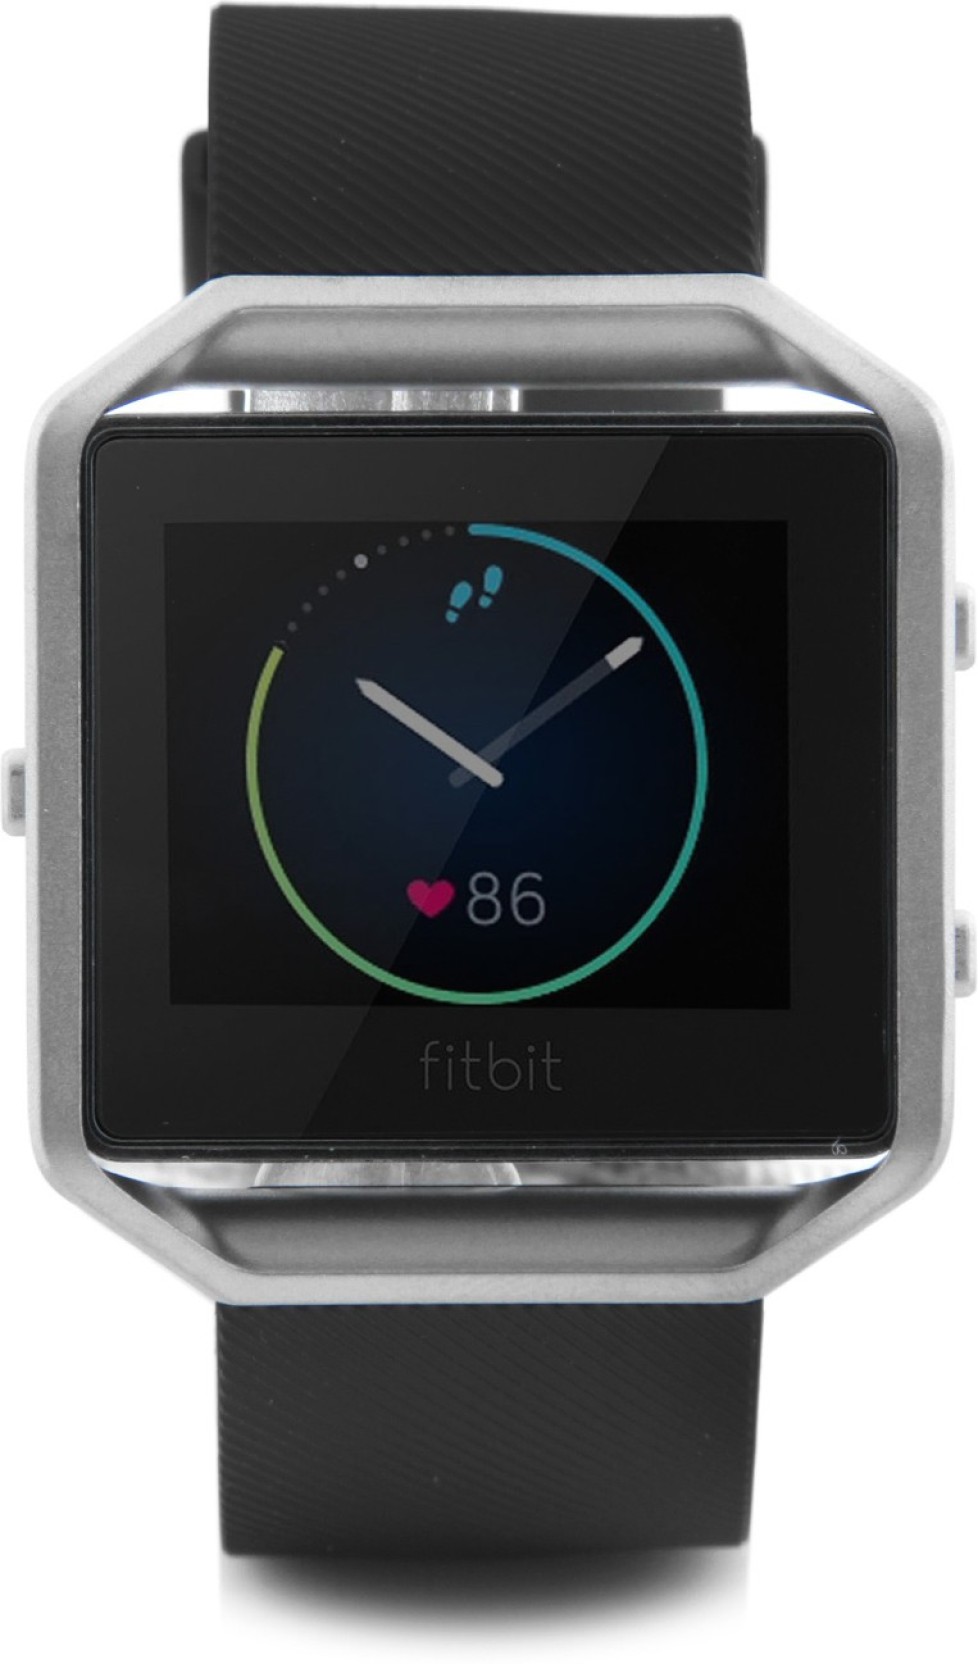 Fitbit Blaze Black Silver Smartwatch Price in India - Buy Fitbit Blaze ...